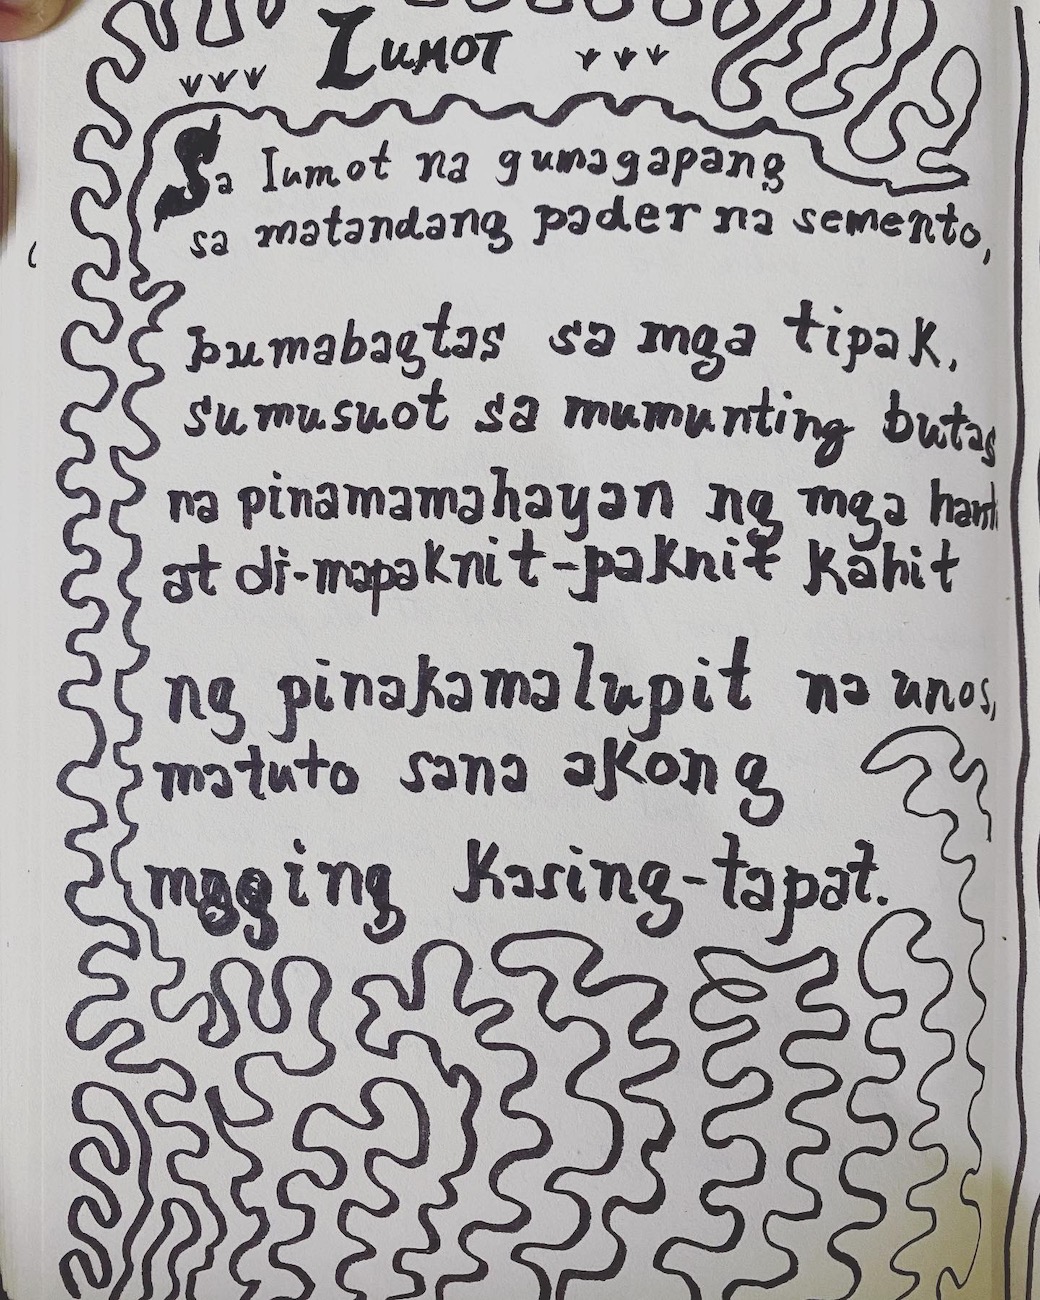 Handwritten Lumot poem